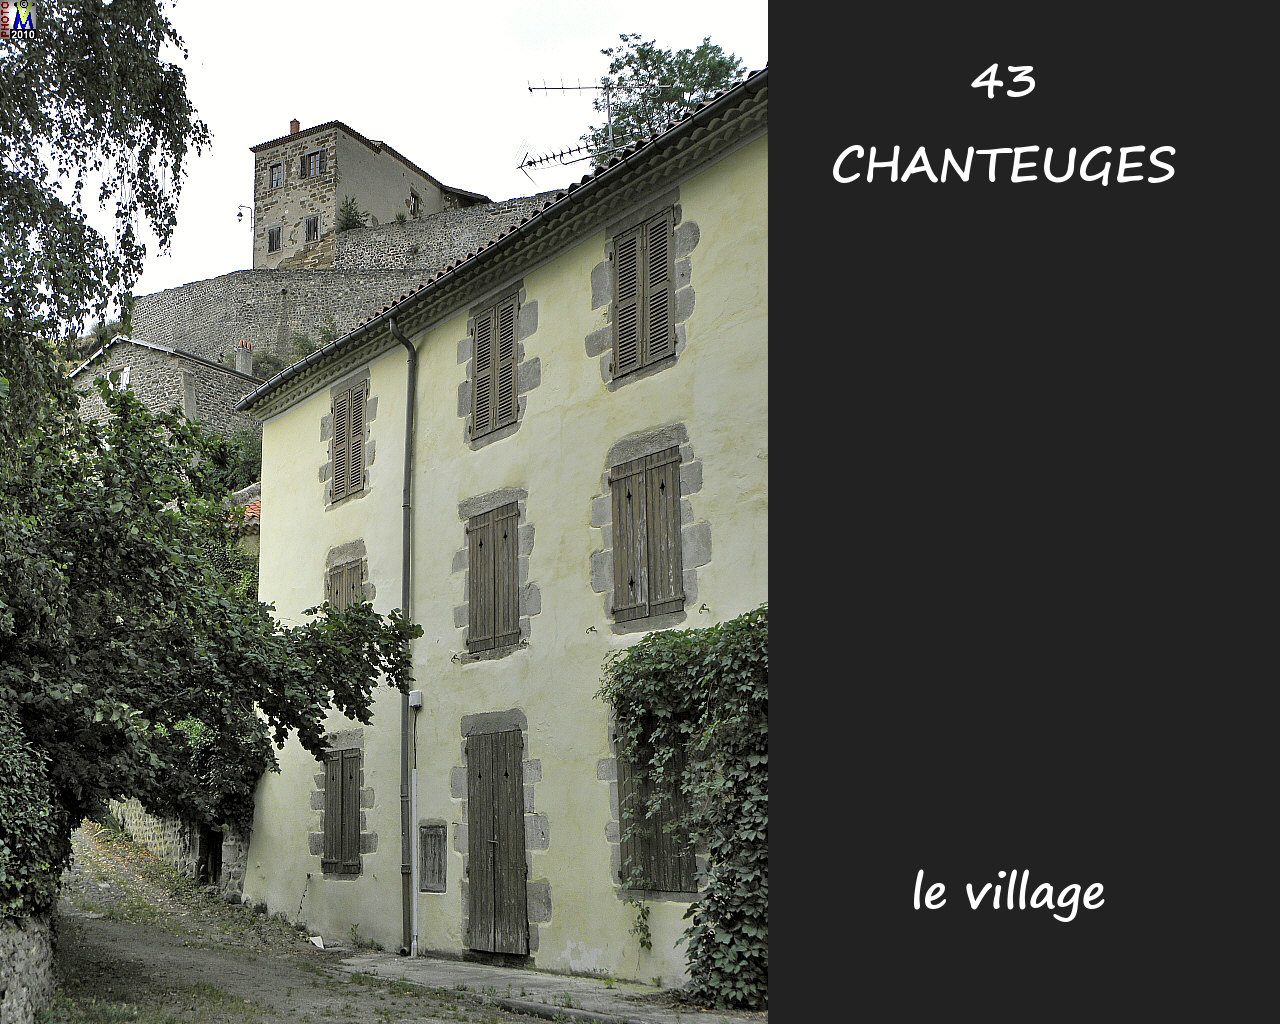 43CHANTEUGES_village_106.jpg